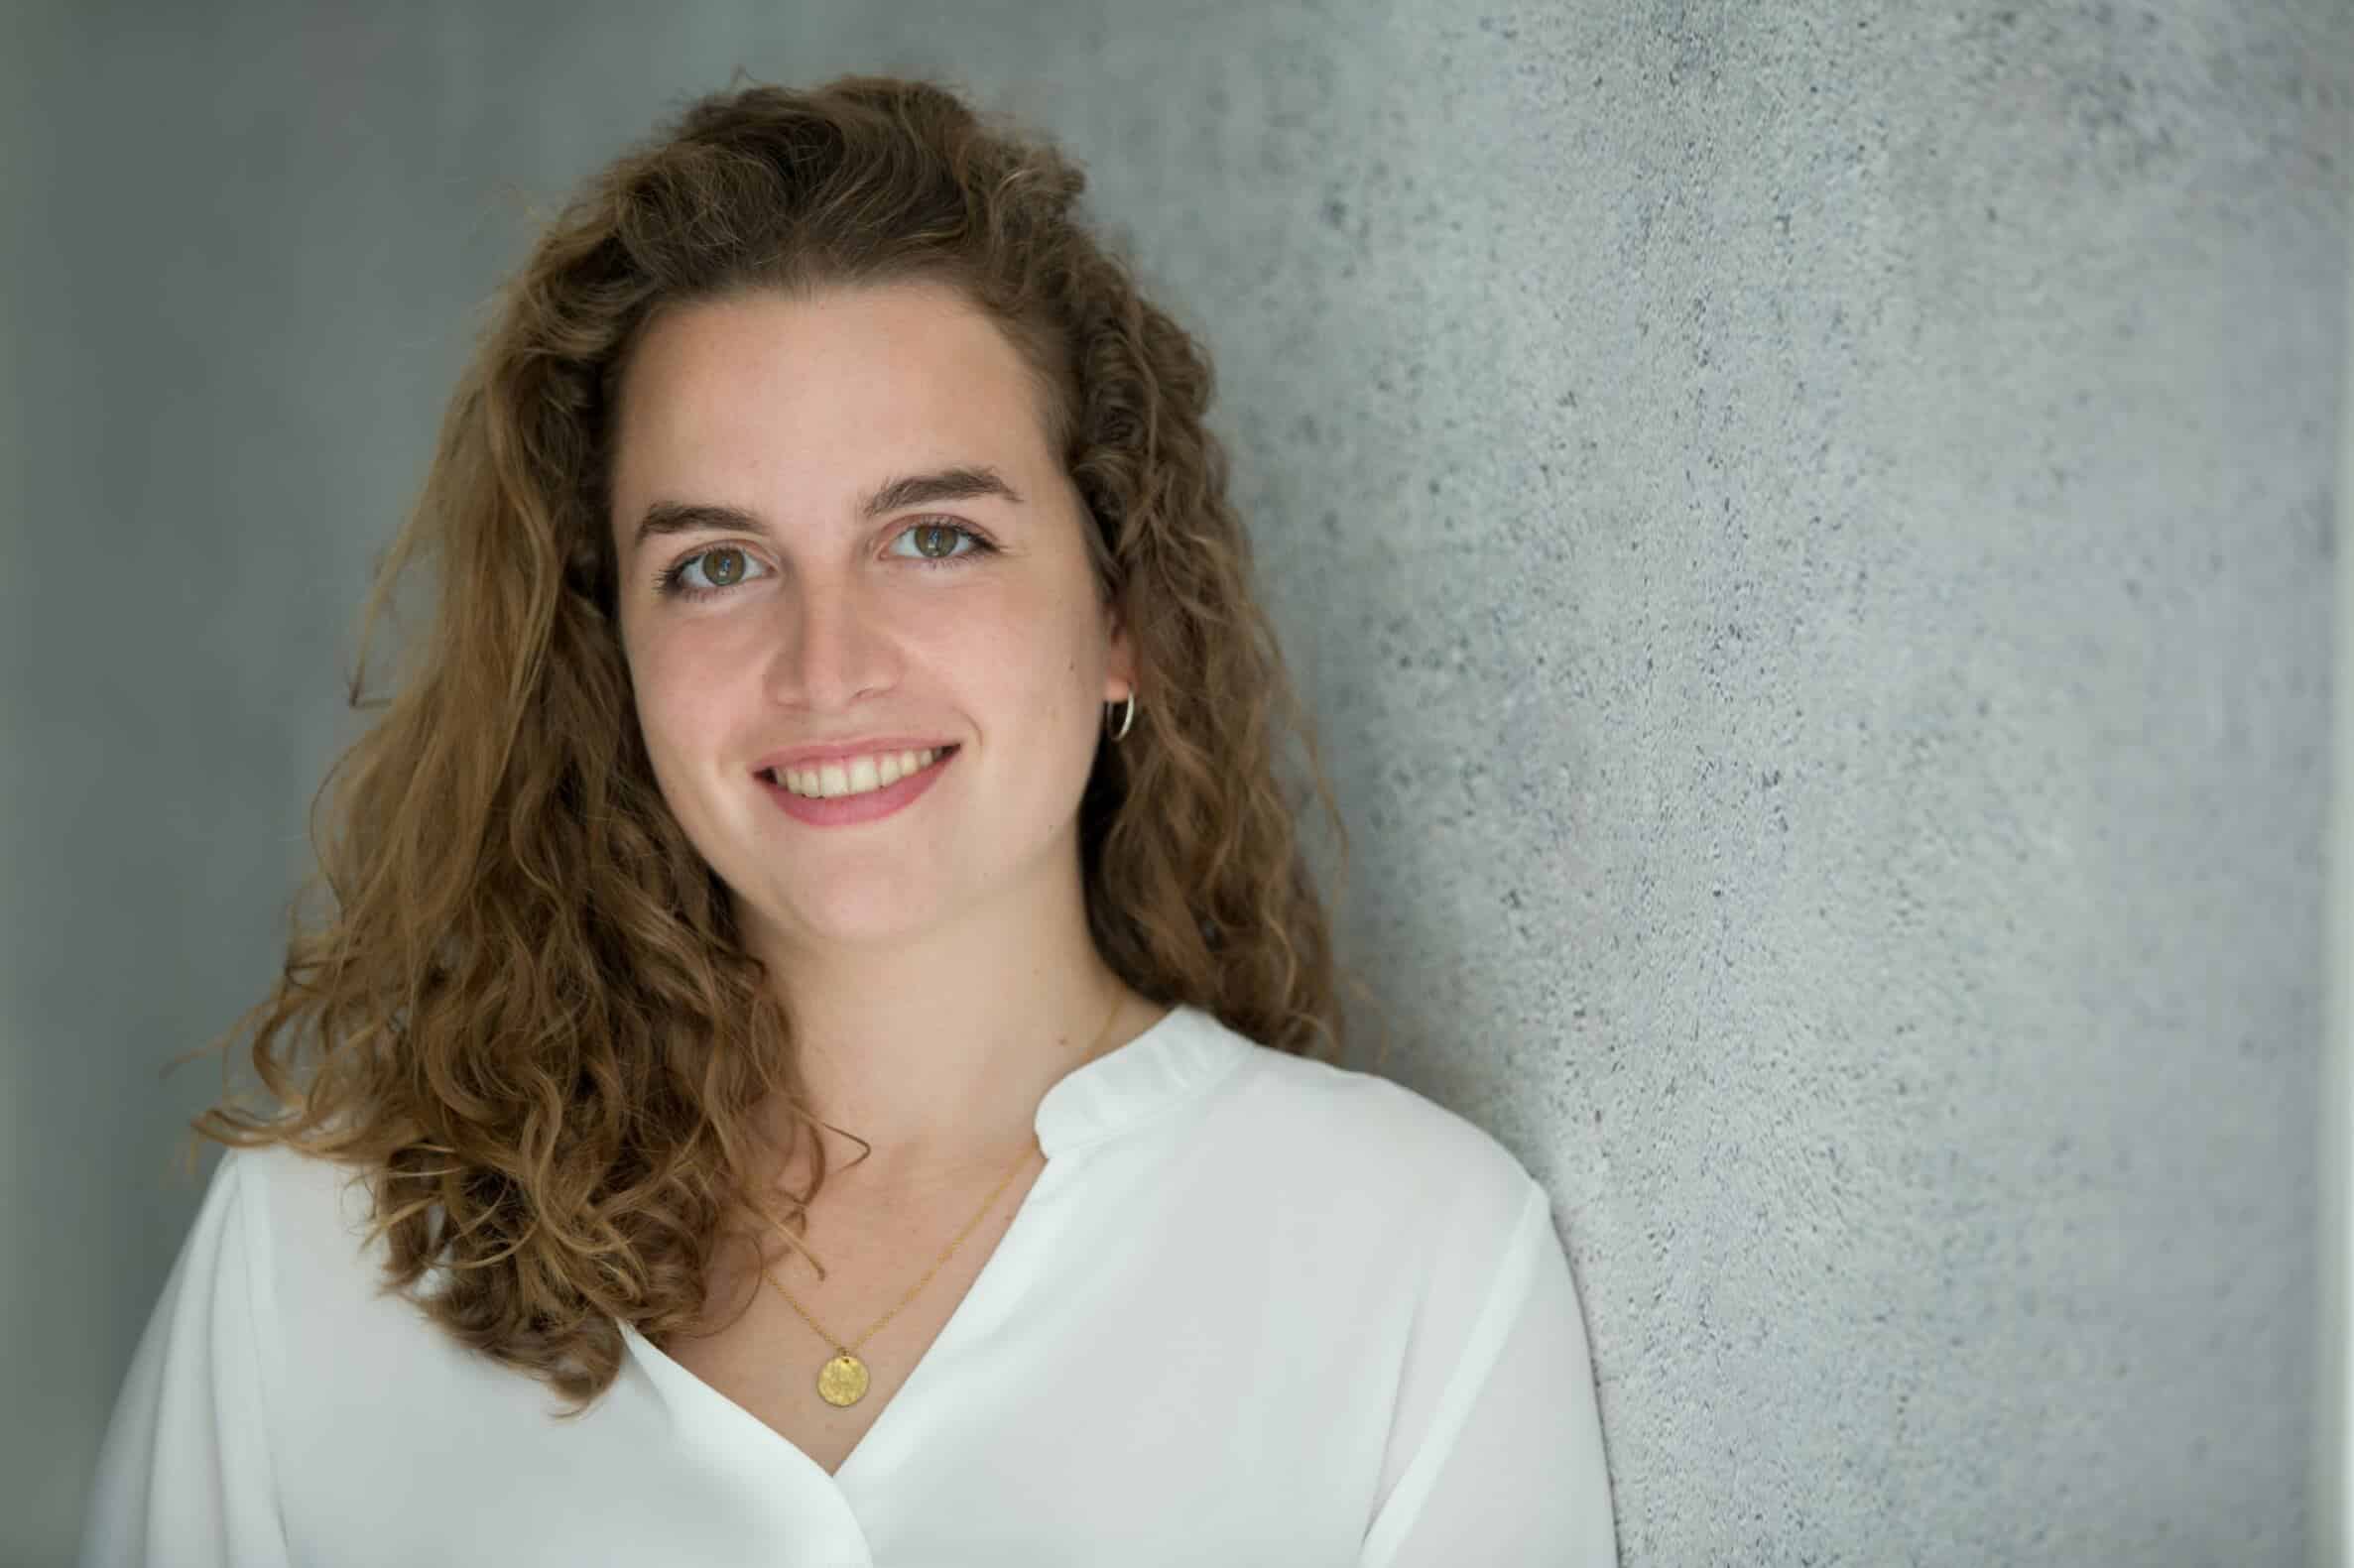 Antonia Böhm SOC shift lead at Truesec profile image